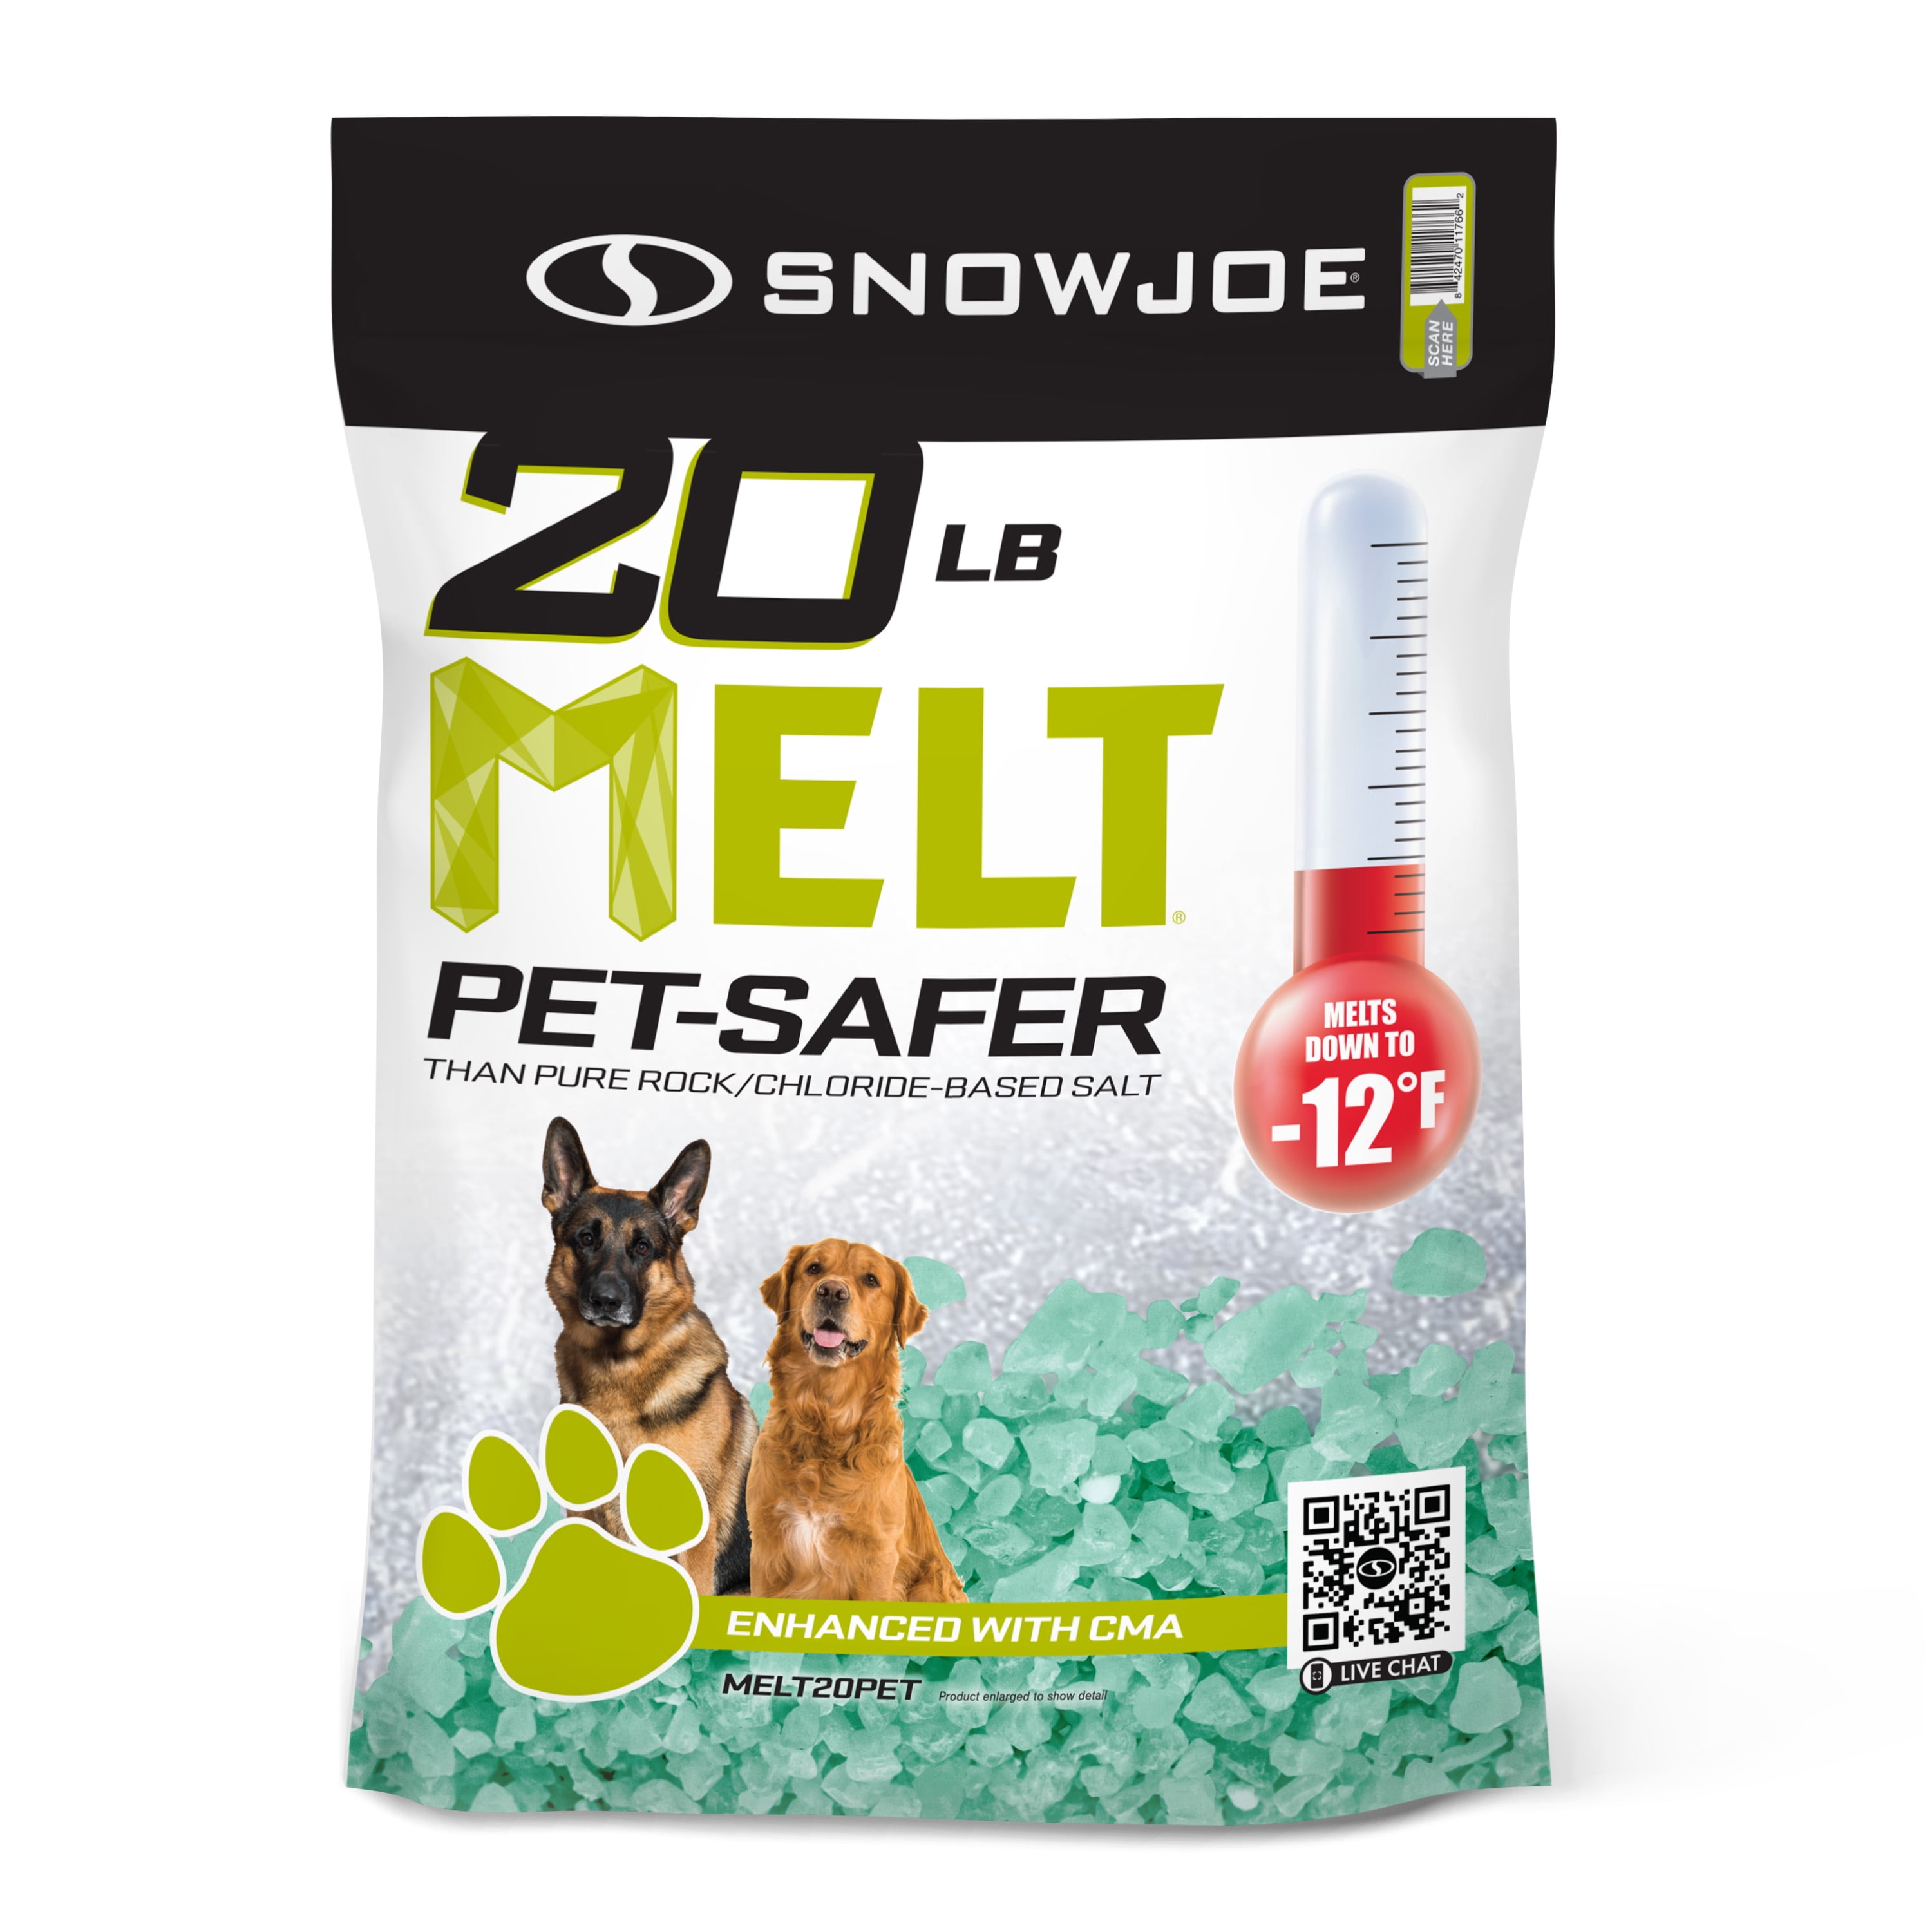 Snow Joe Pet-Safer Premium Ice Melt , 20-LBS